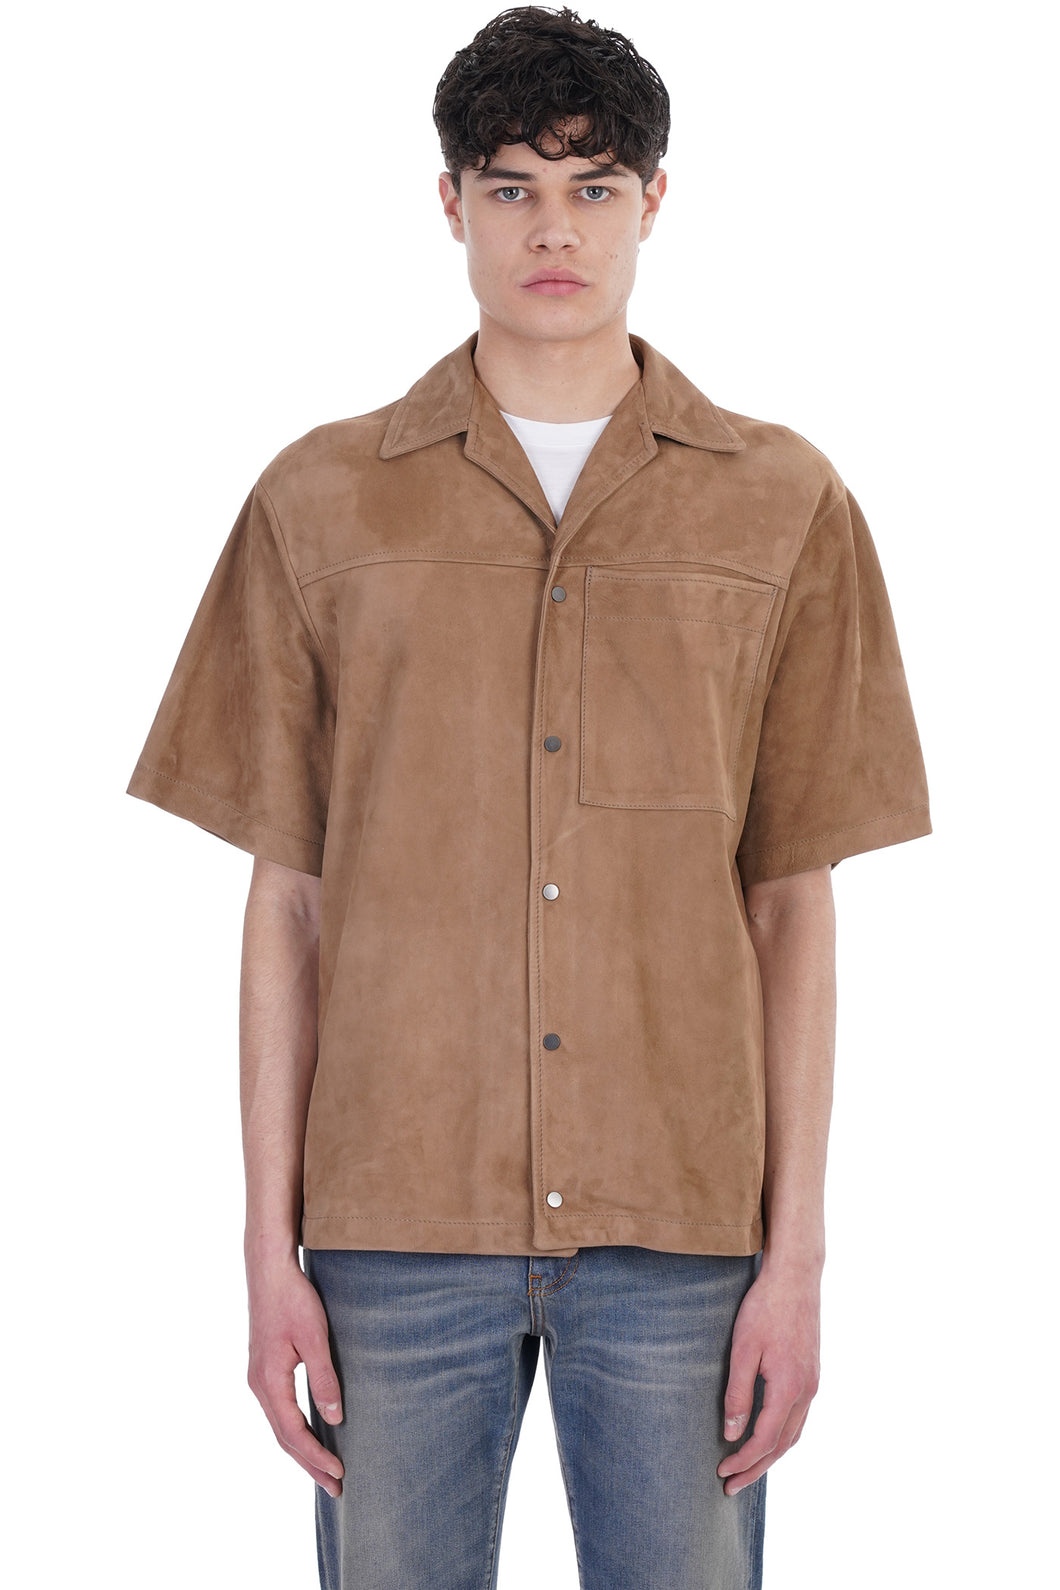 Men’s Half Sleeves Cream Brown Suede Leather Shirt